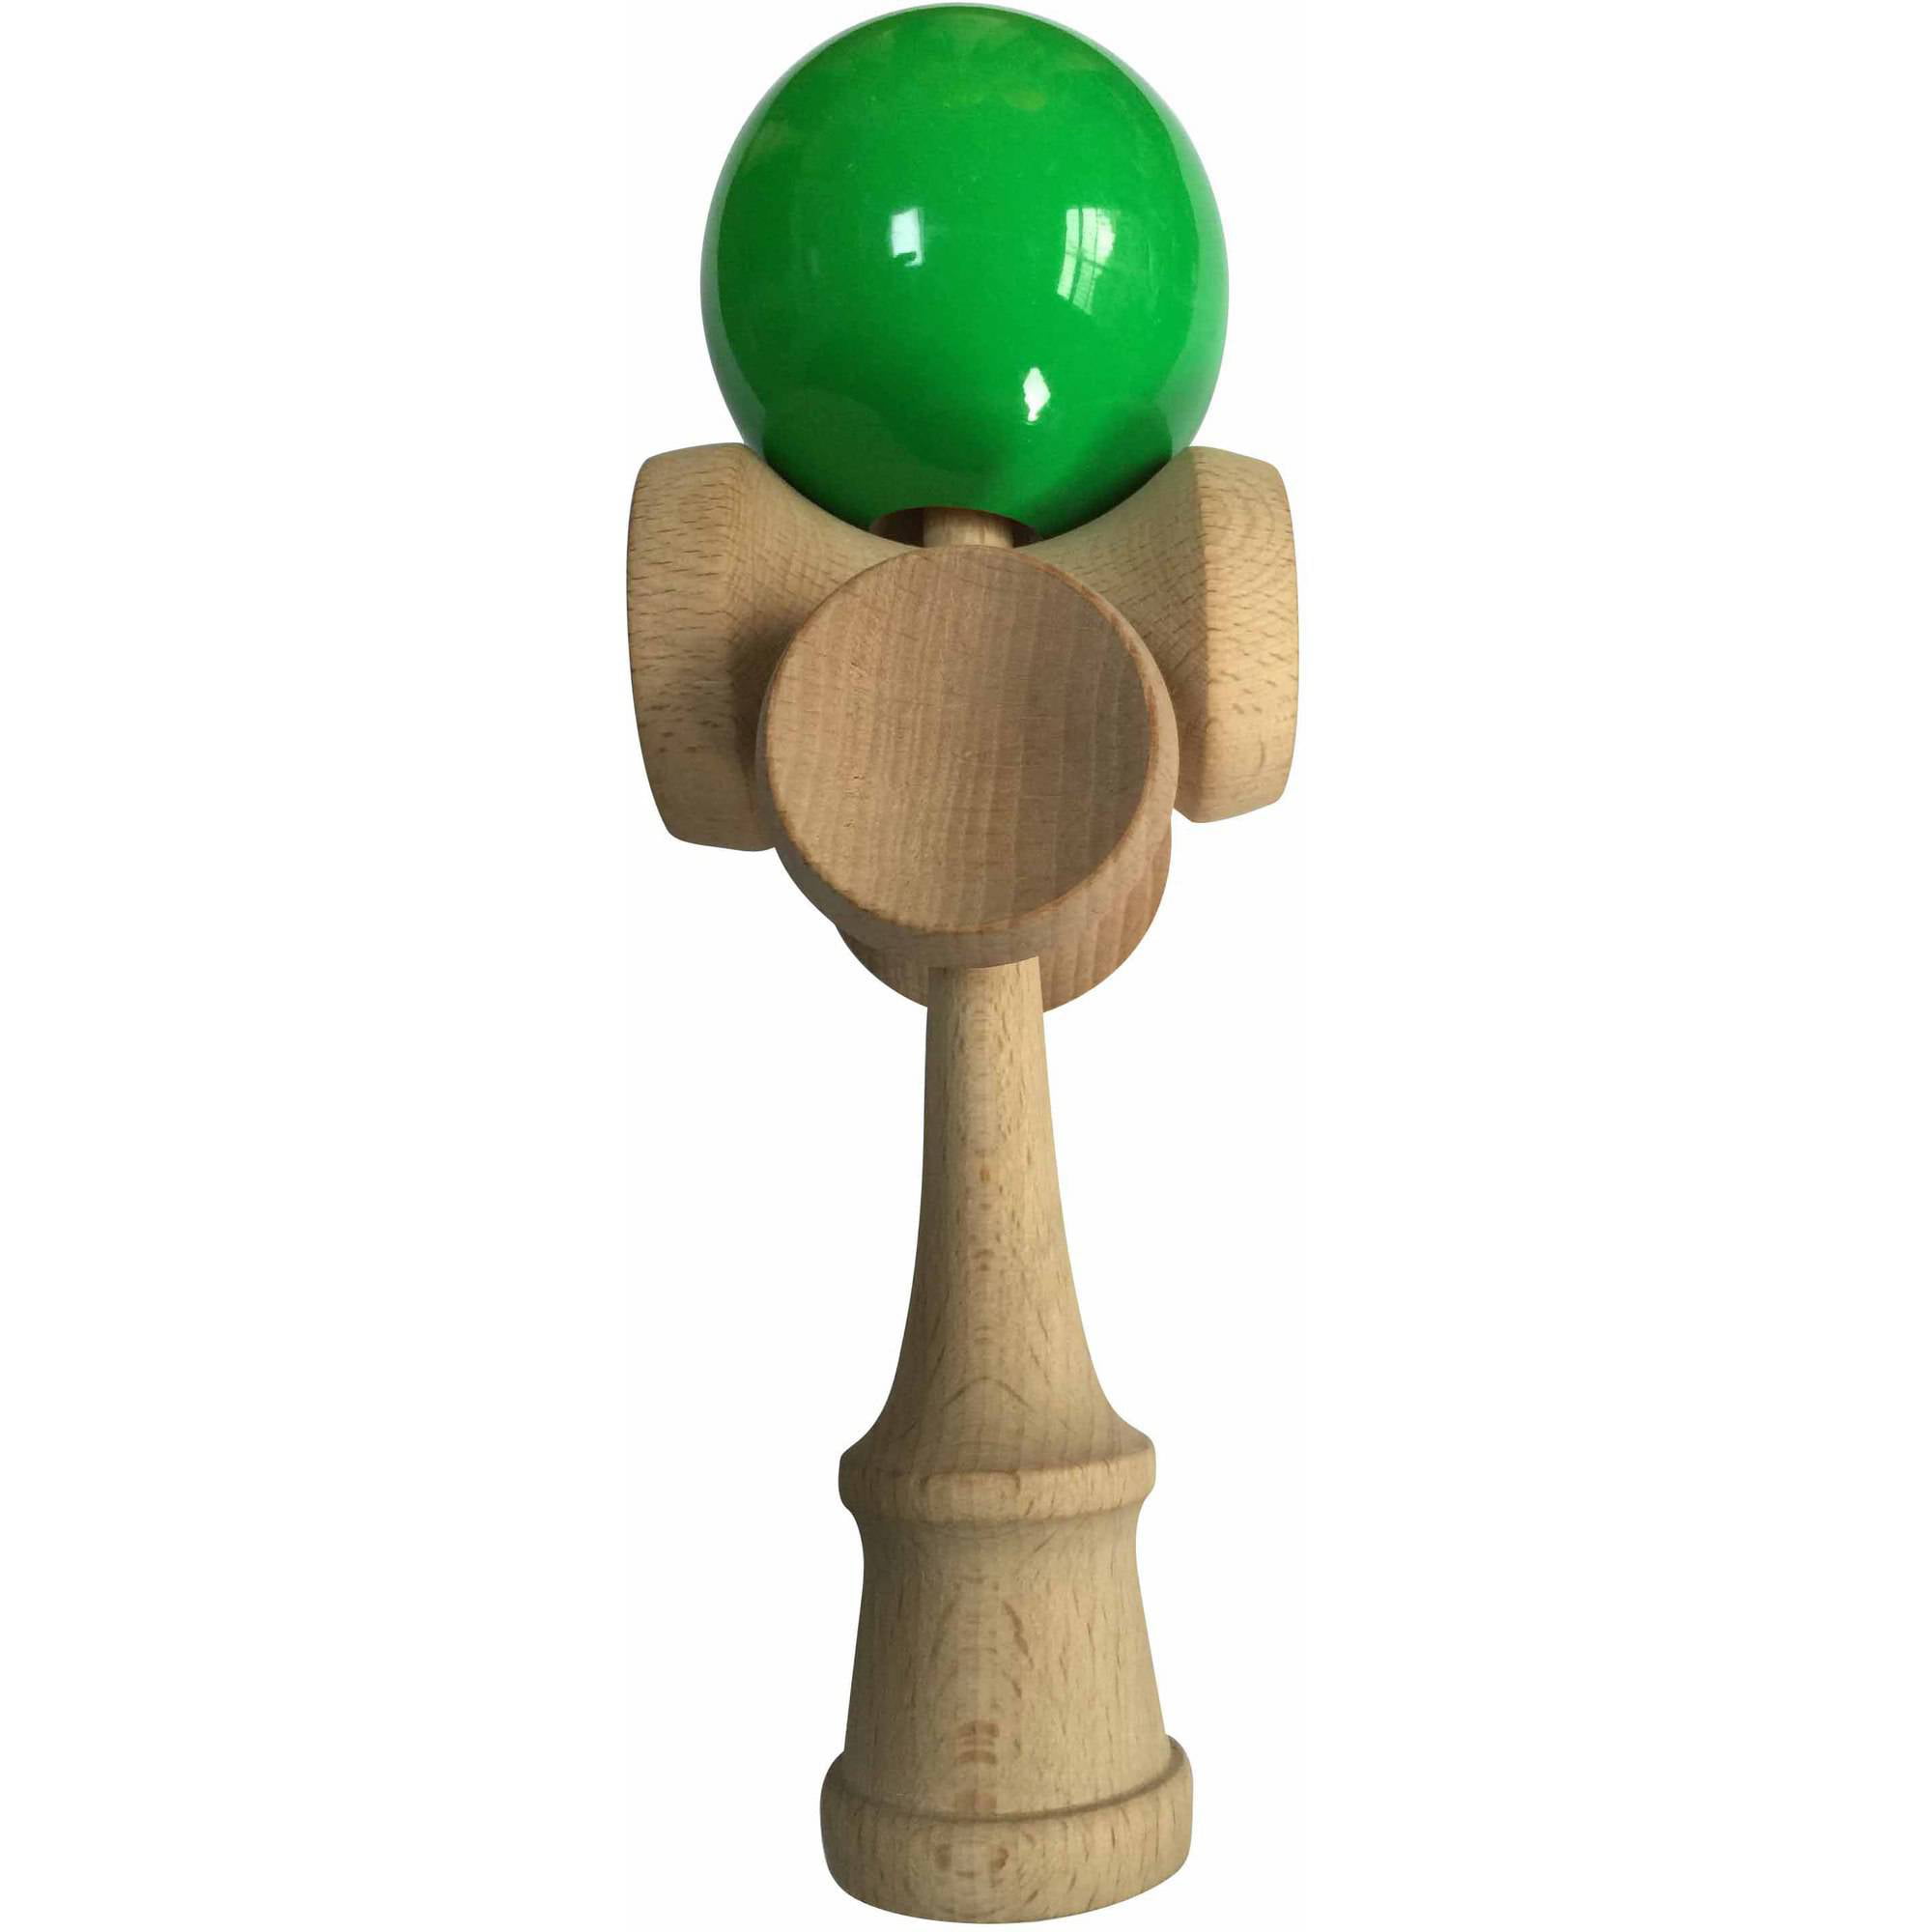 Green Kendama USA Classic Toy